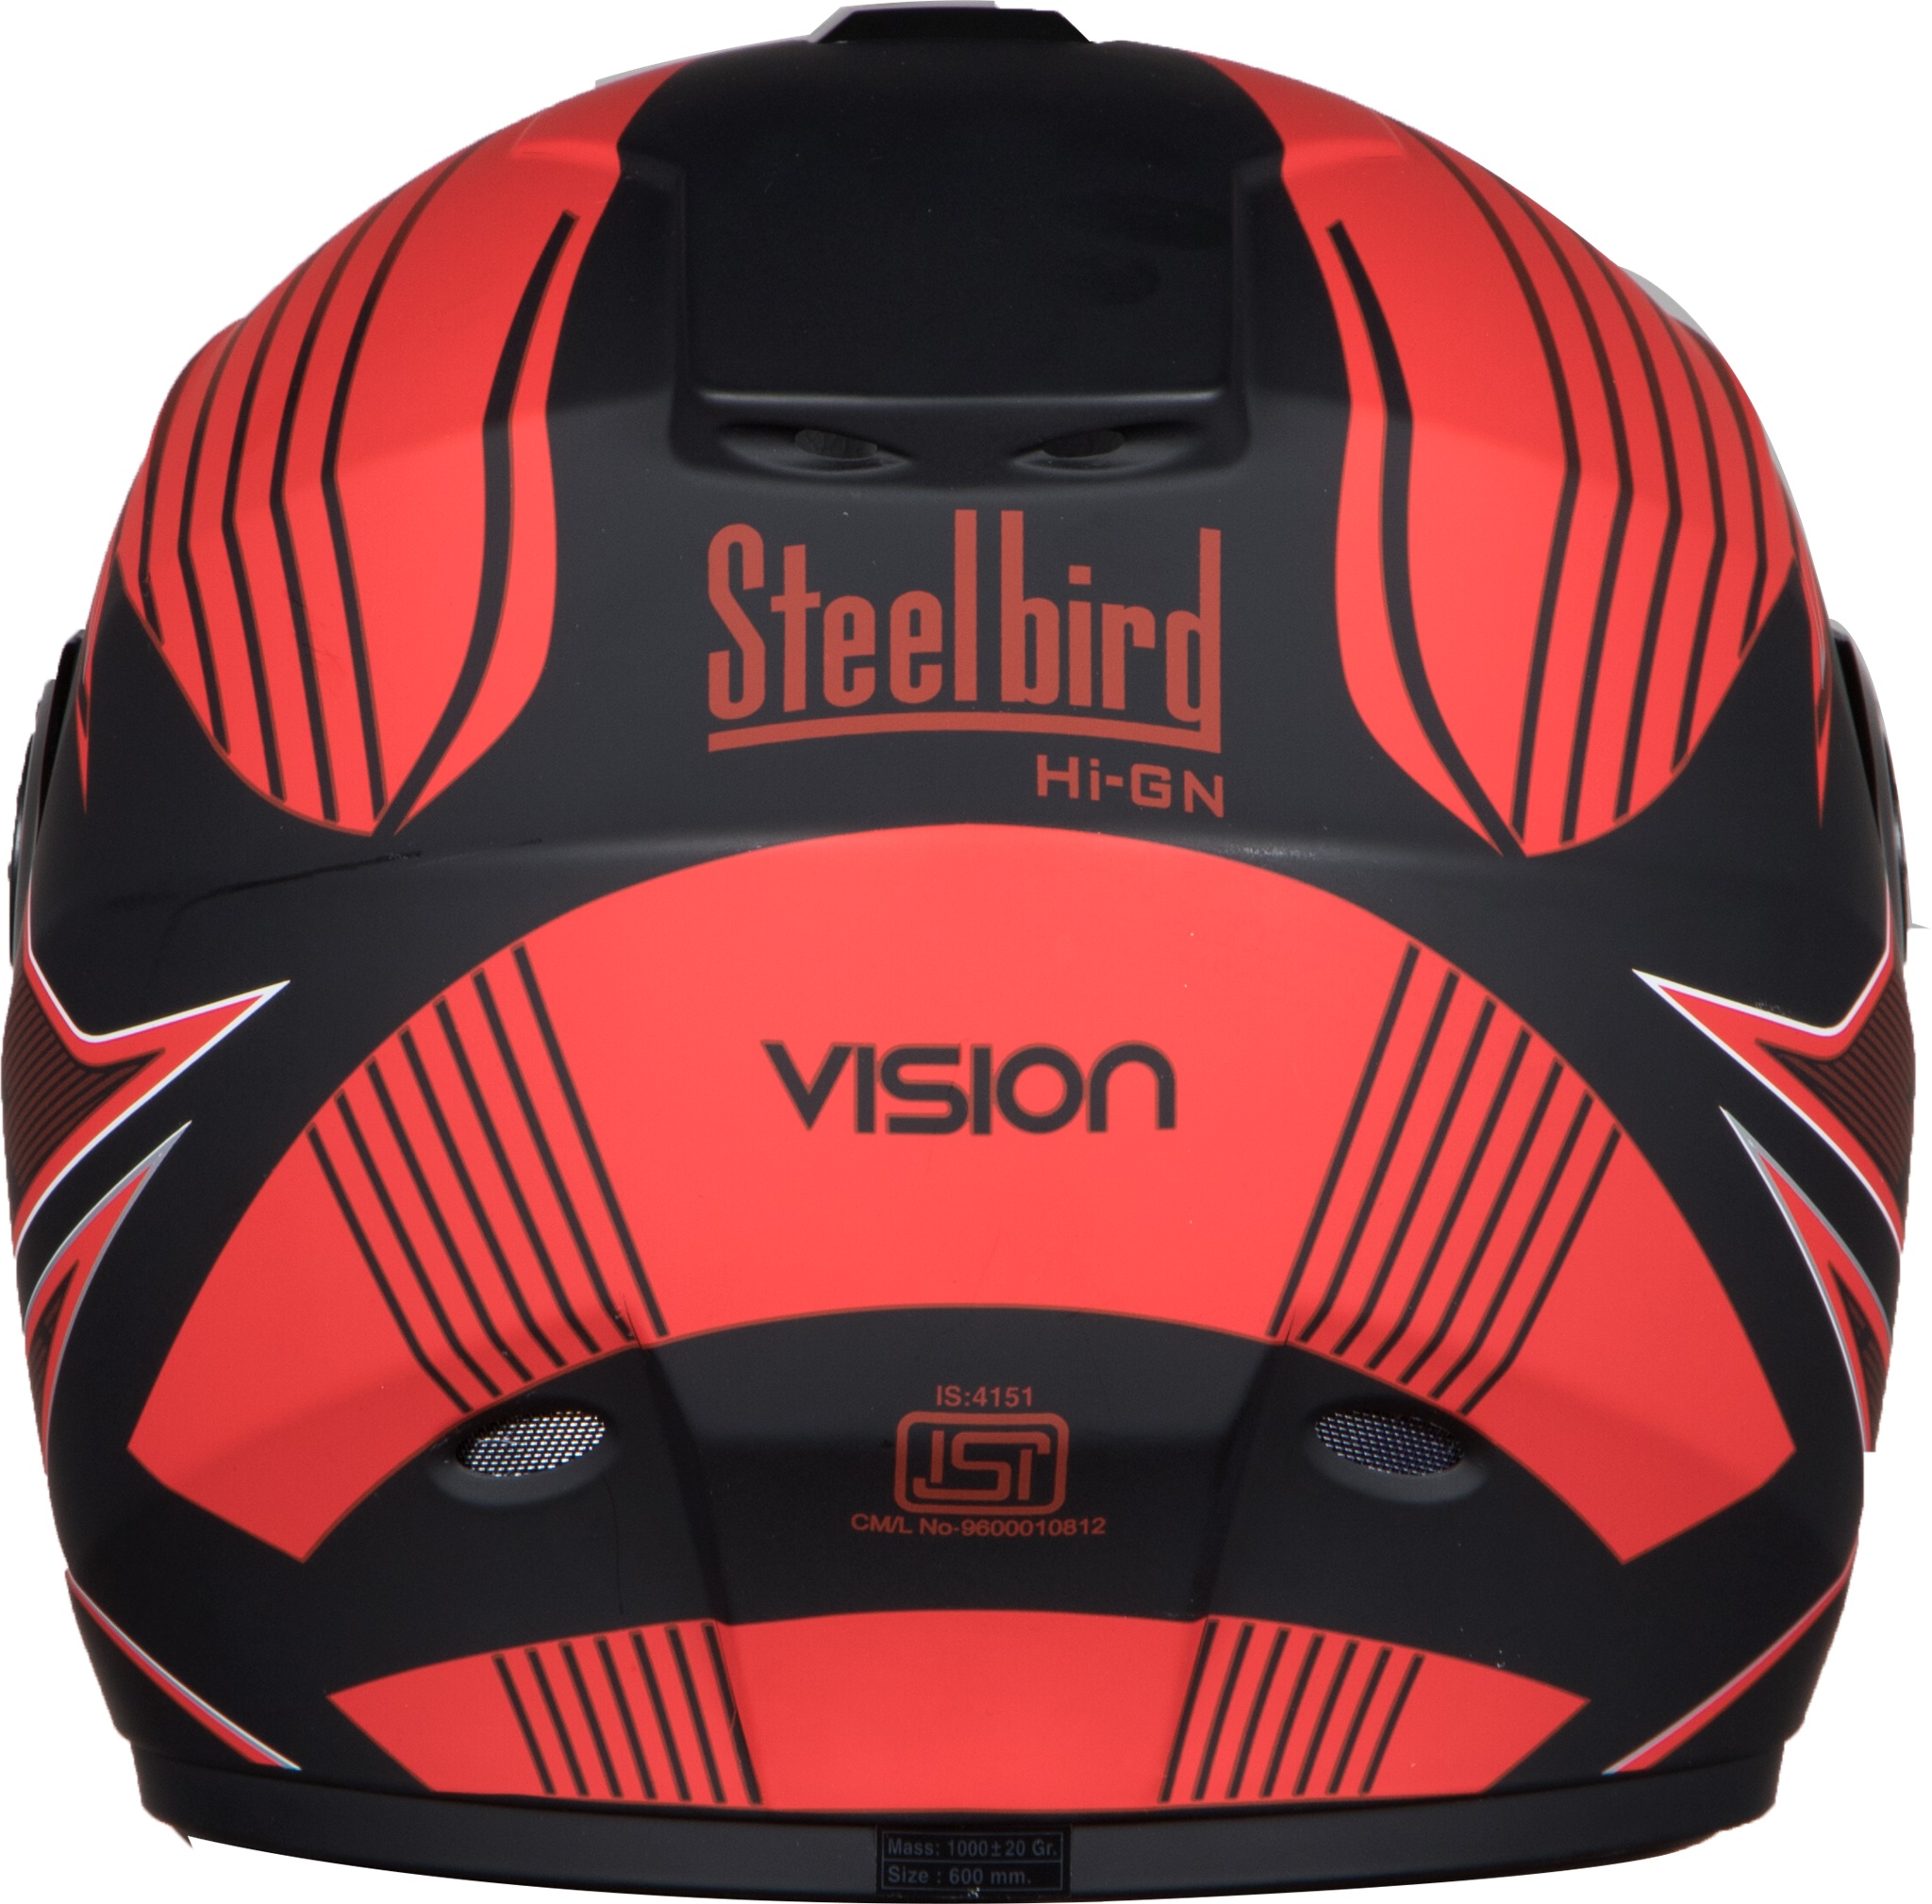 Steelbird HI-GN Men Vision Decal Attis Matt Black With Red